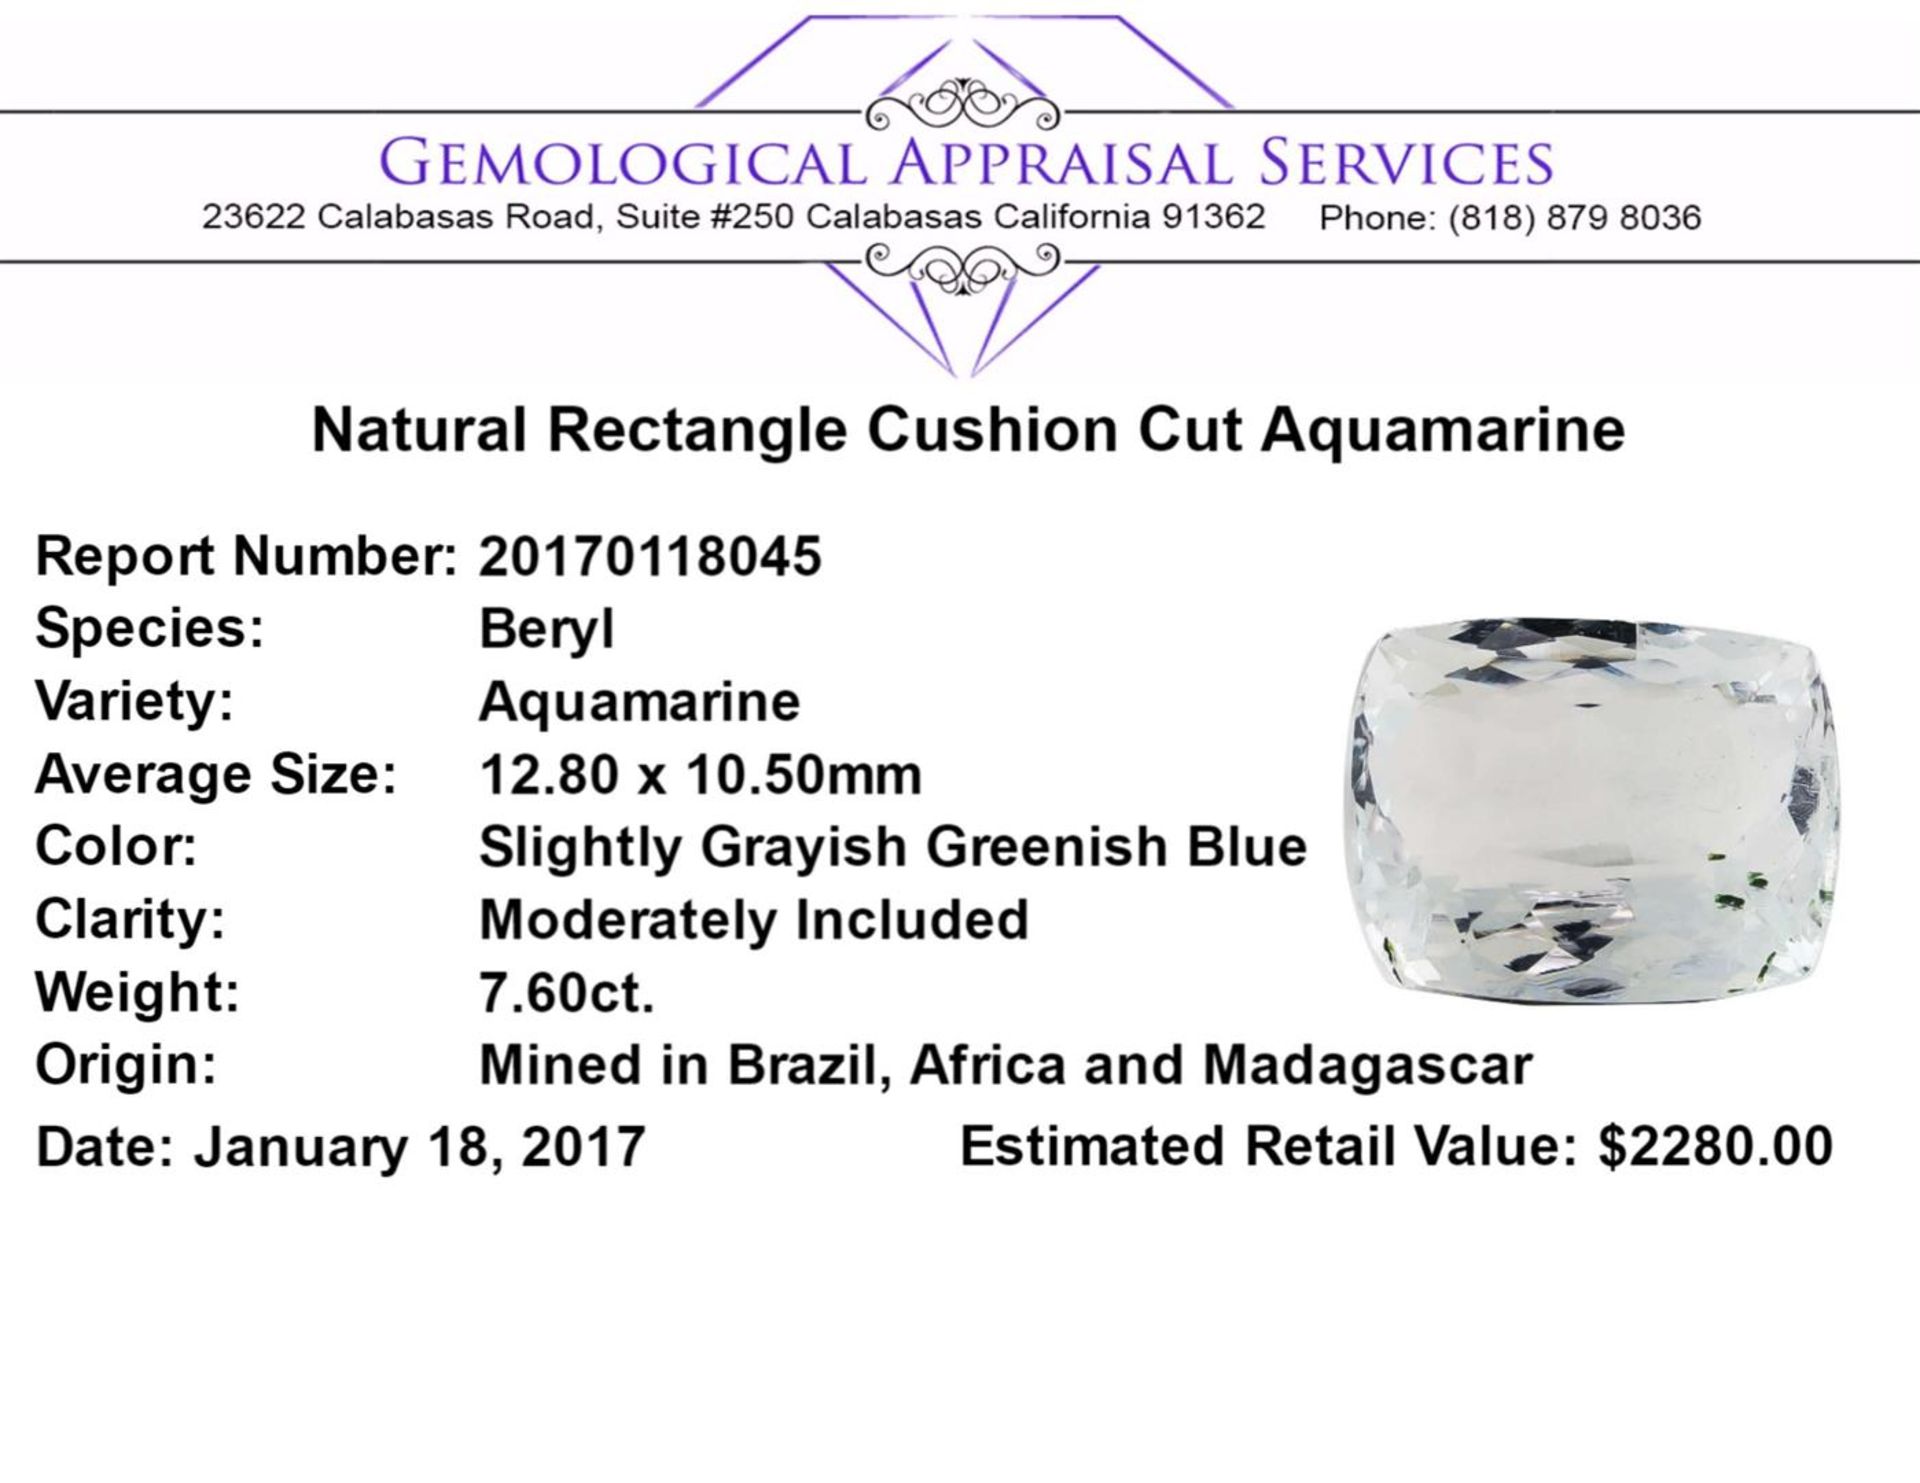 7.60 ct.Natural Rectangle Cushion Cut Aquamarine - Image 2 of 2